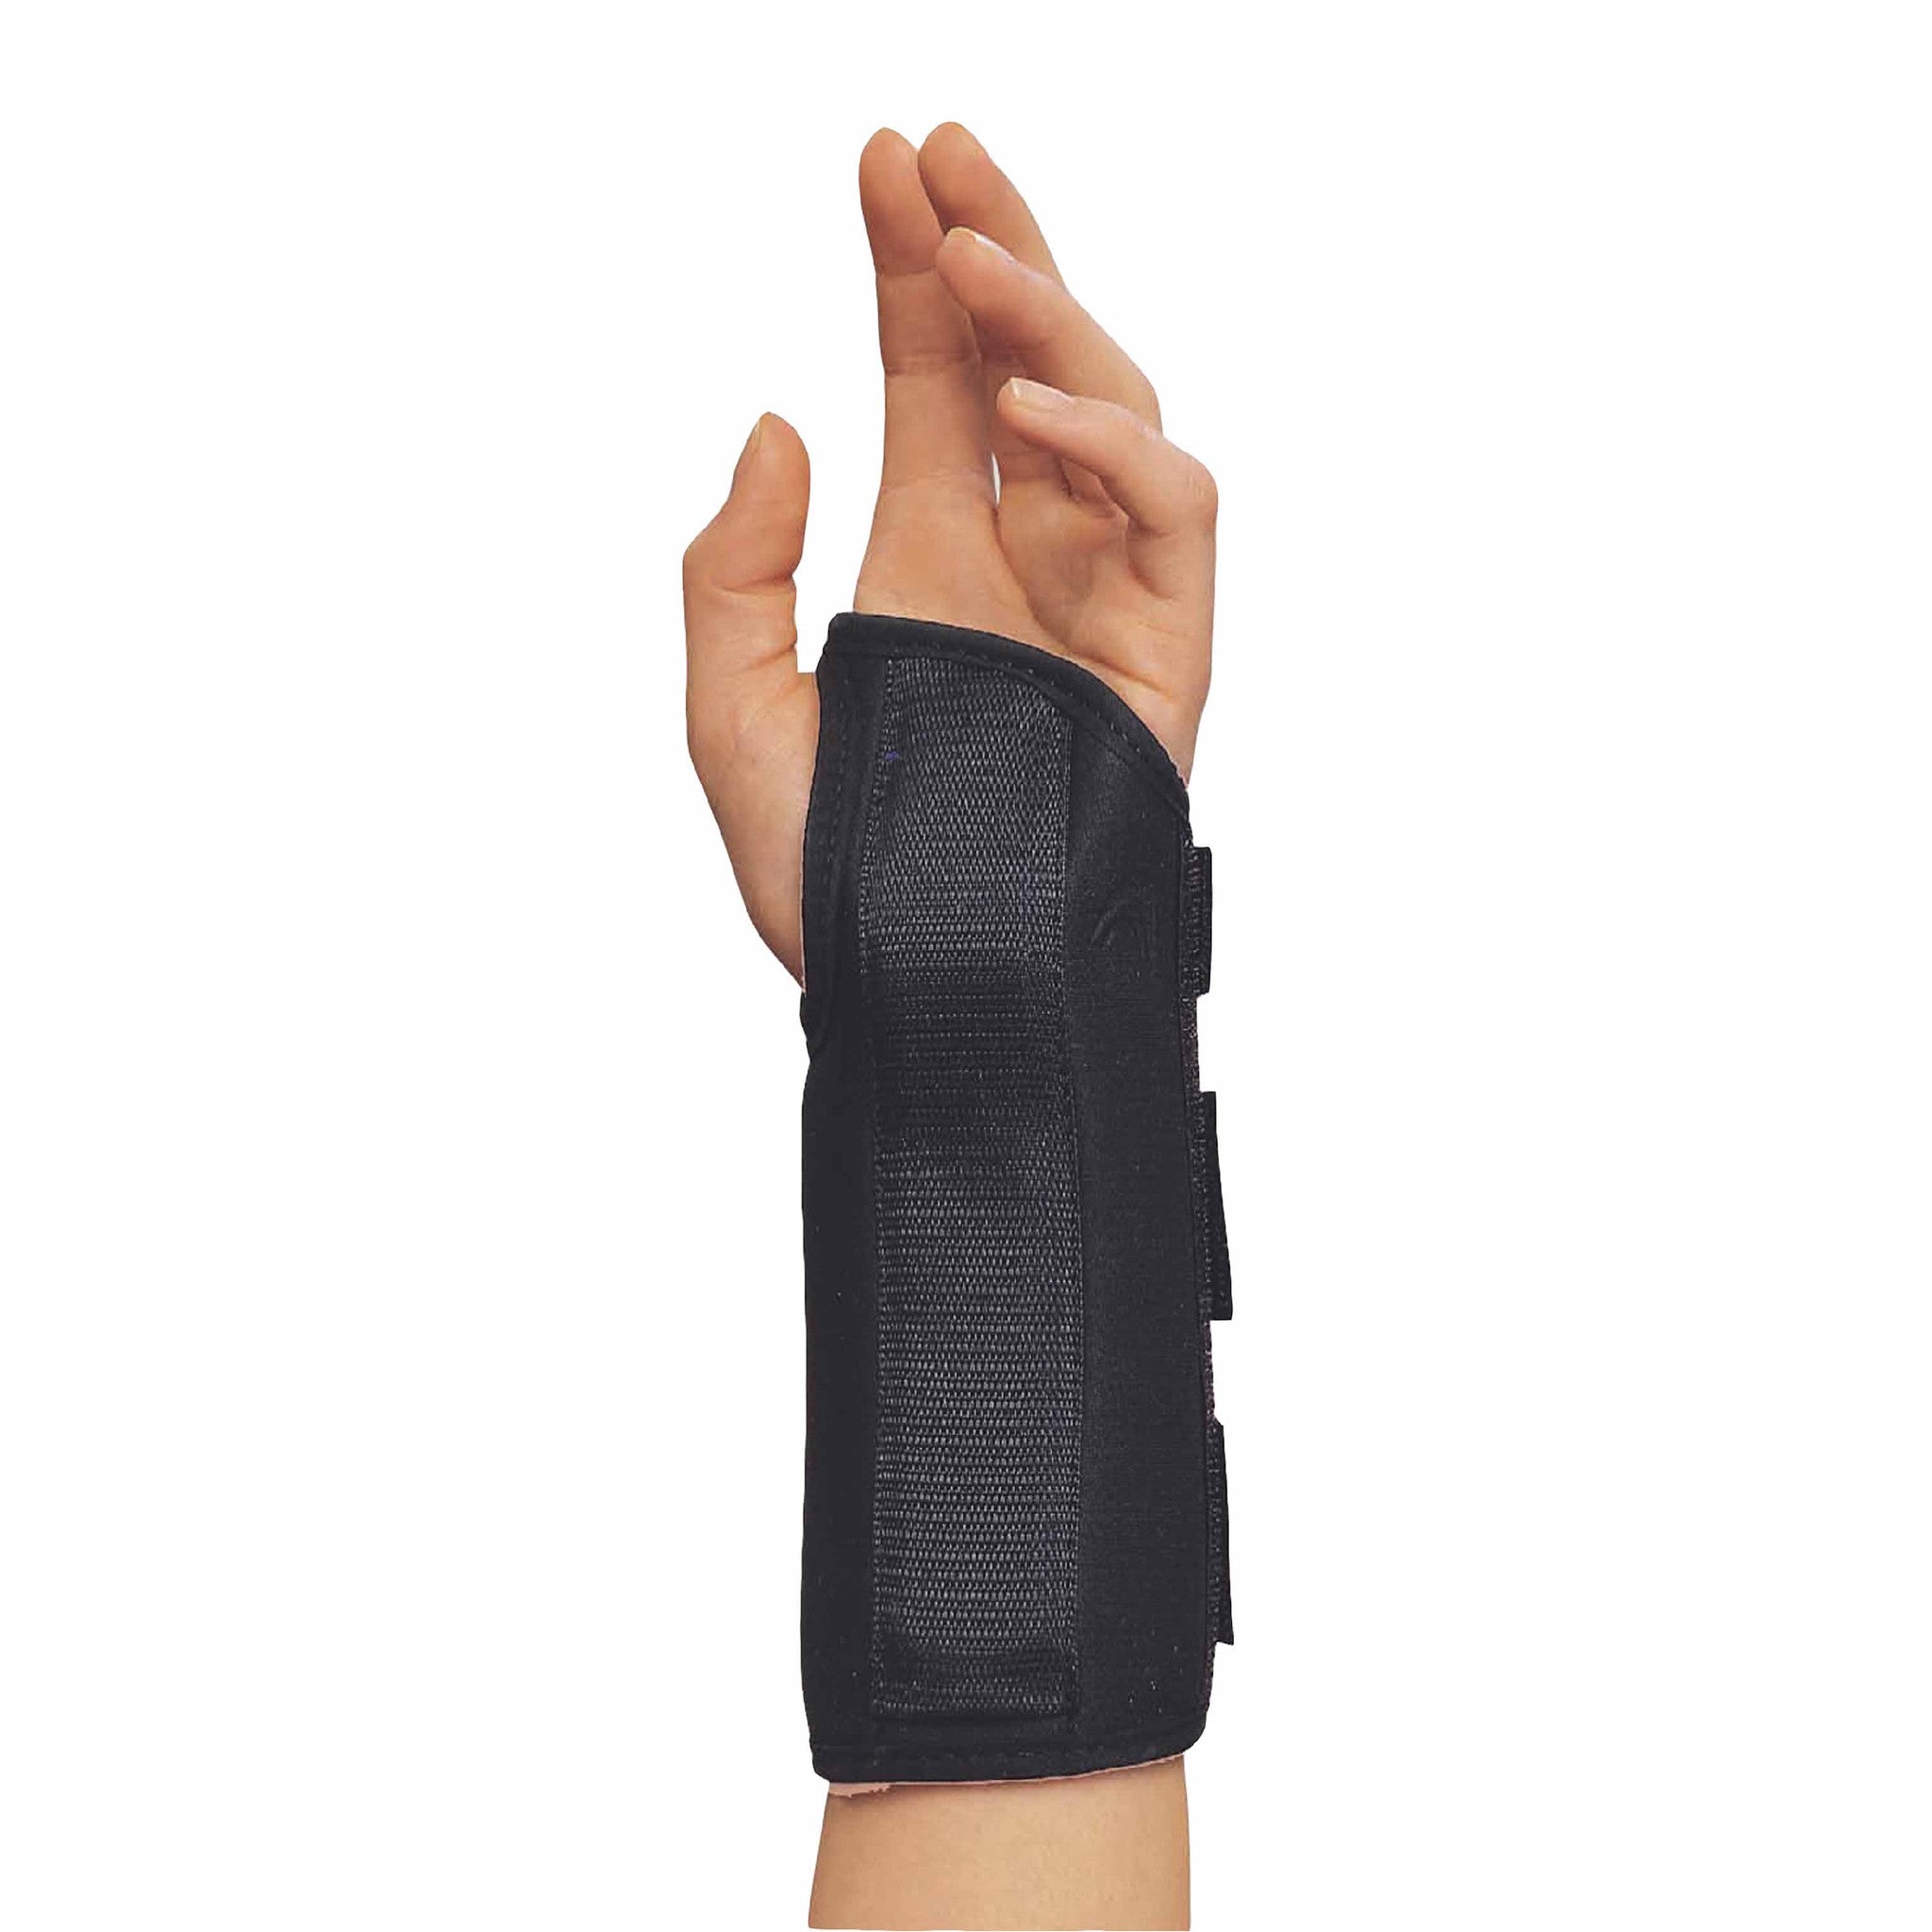 QC Elastic Splint Wrist Reversible - Jollys Pharmacy Online Store